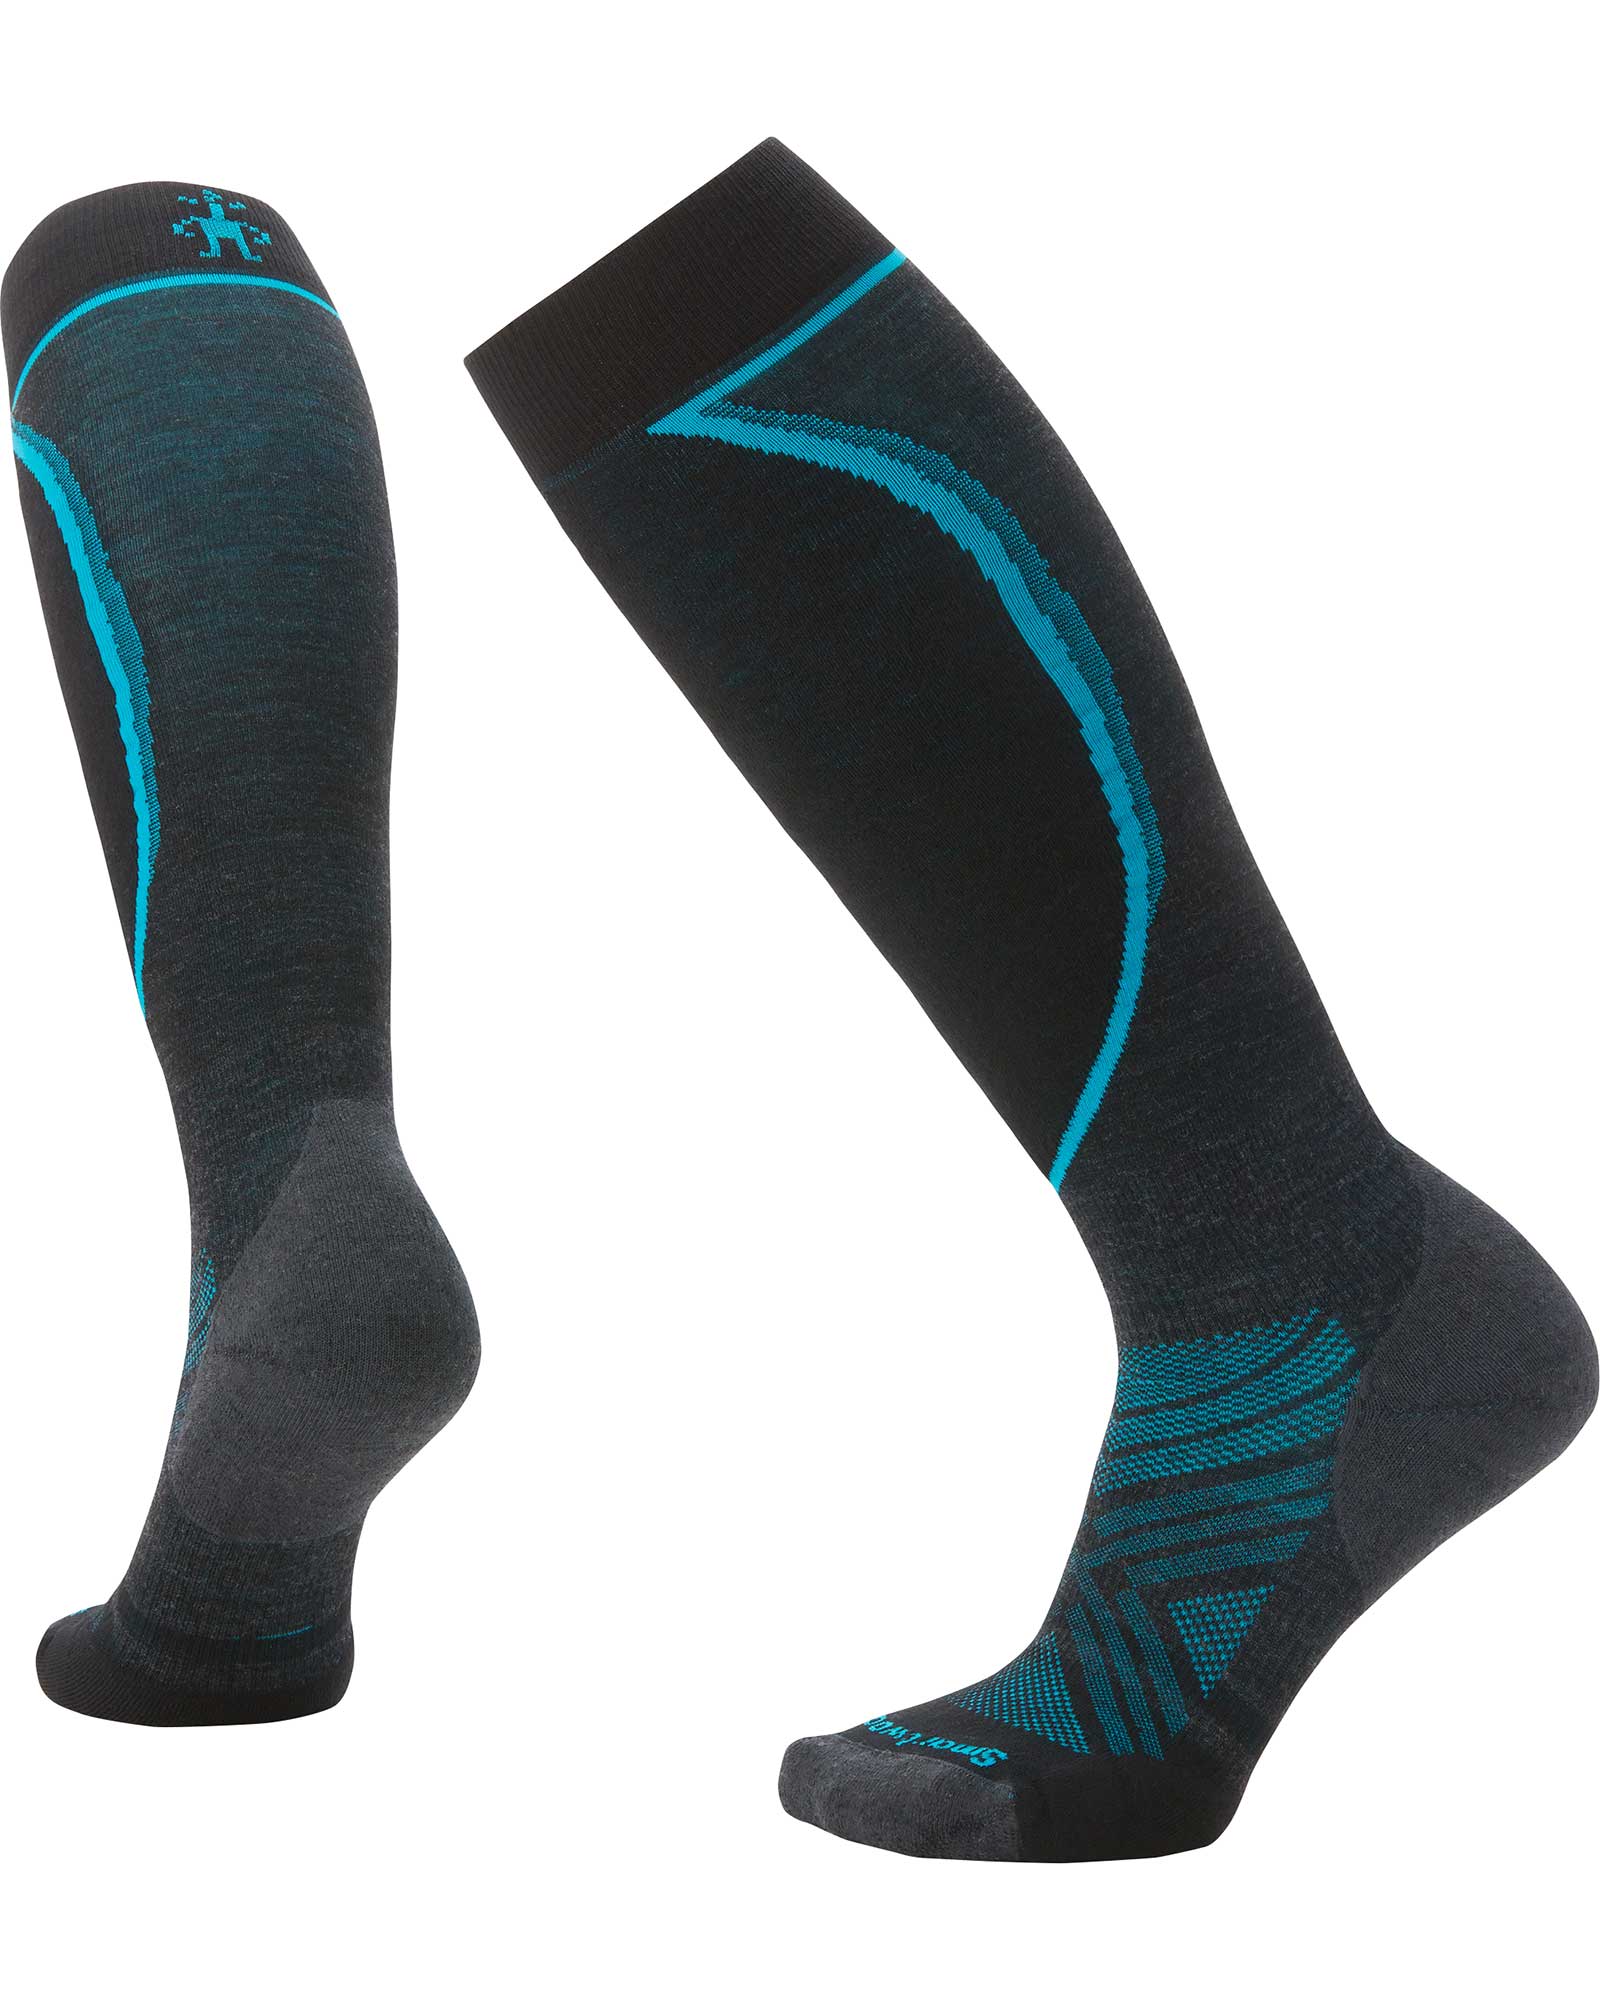 Smartwool Targeted Cushion Women’s Ski Socks - Charcoal S